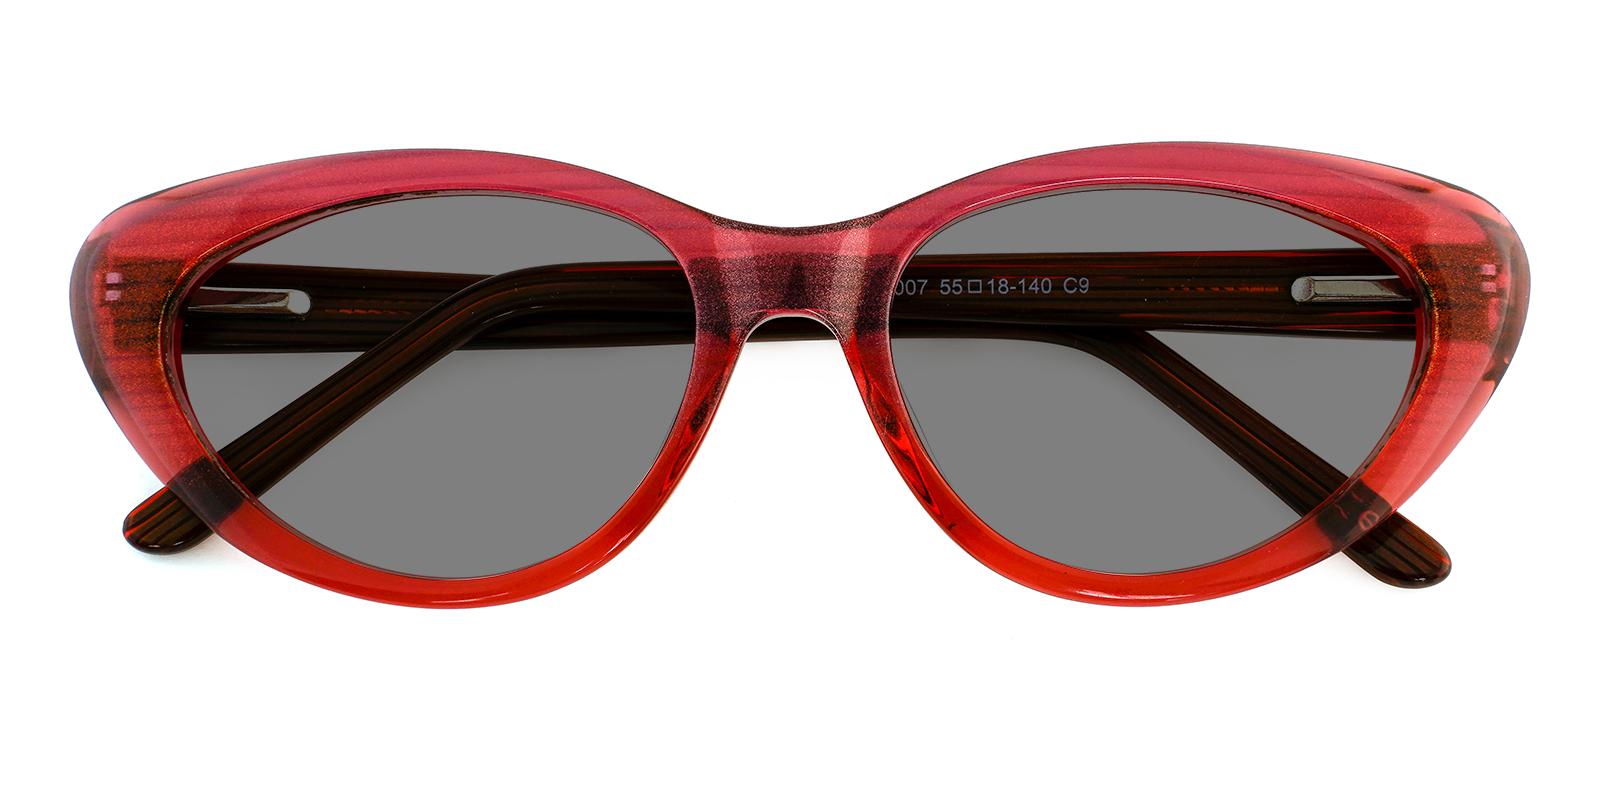 Botanist Red Acetate SpringHinges , Sunglasses , UniversalBridgeFit Frames from ABBE Glasses